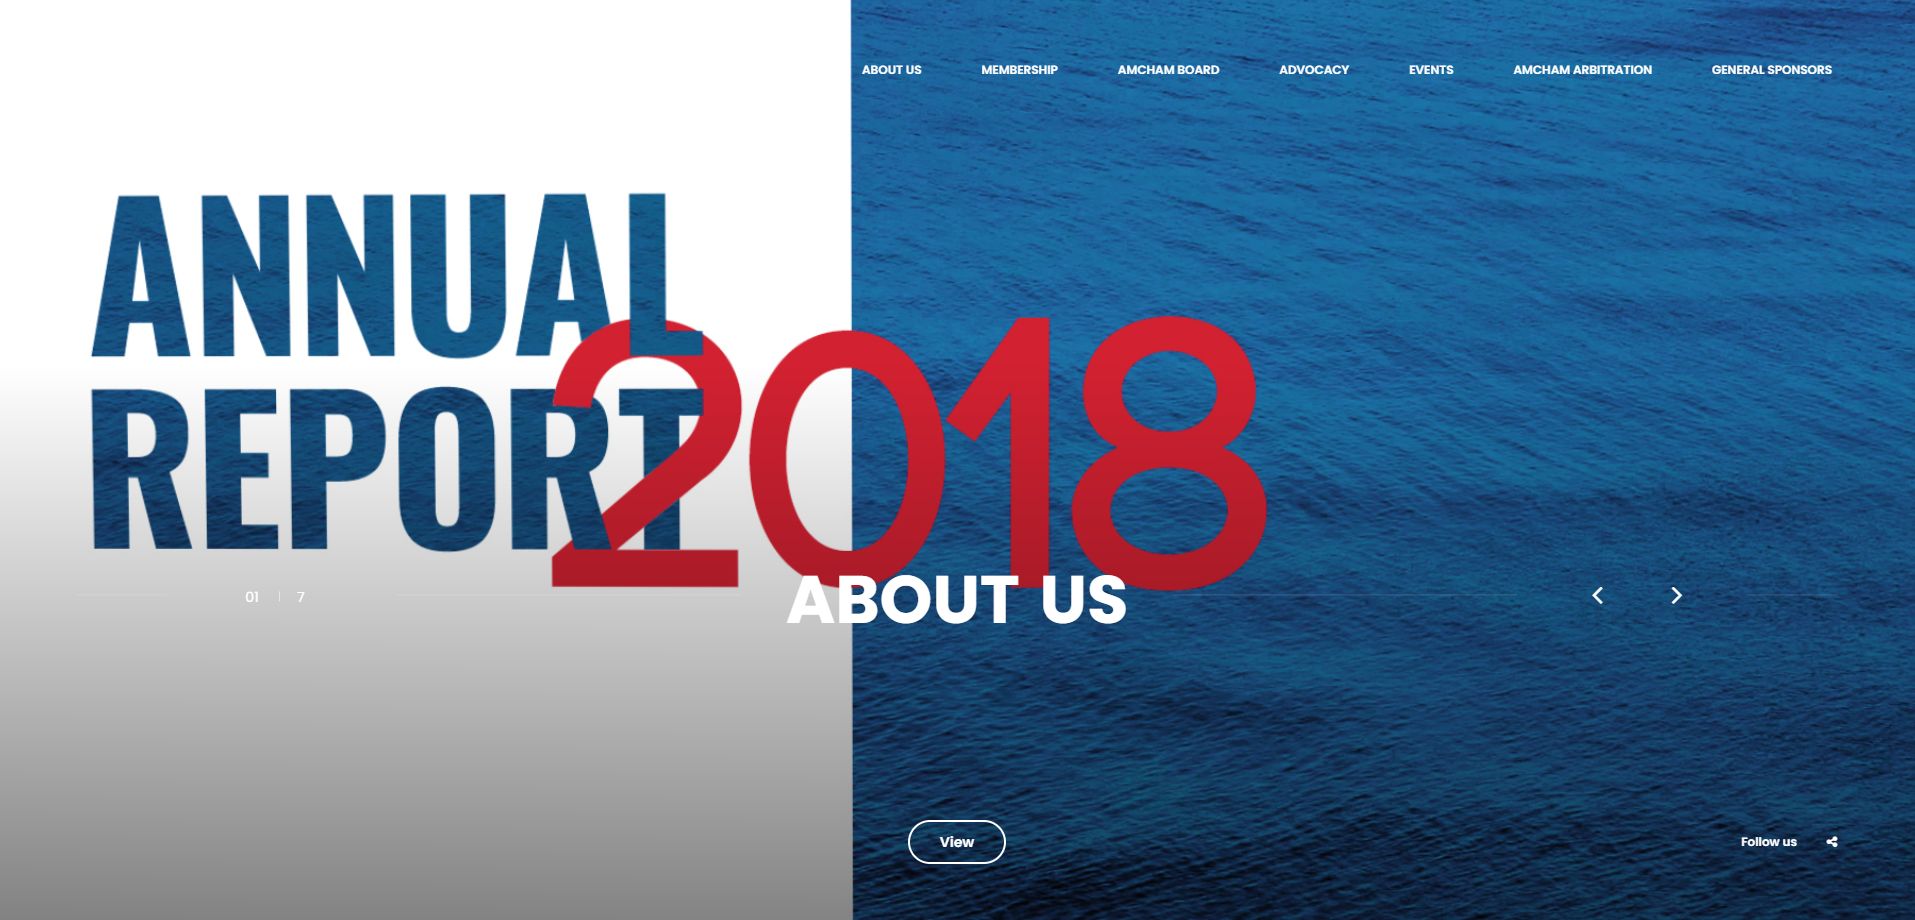 Annual Report 2018 website Image